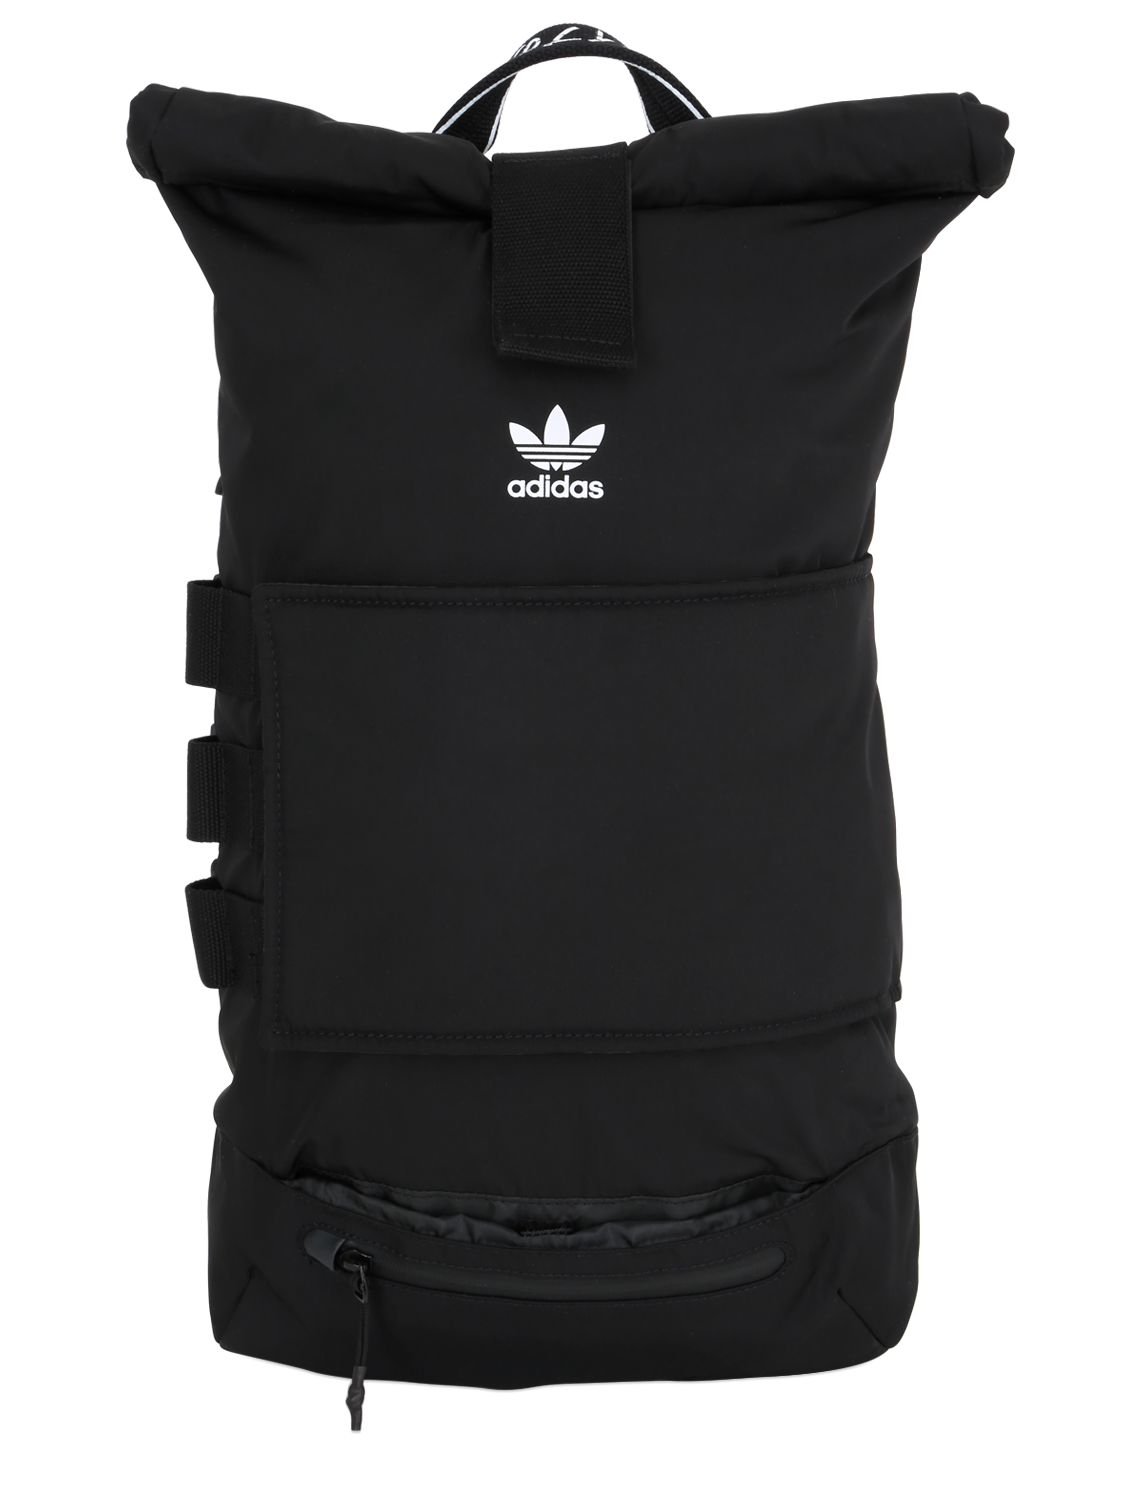 adidas Originals Men's Black Nmd Nylon Roll-top Backpack